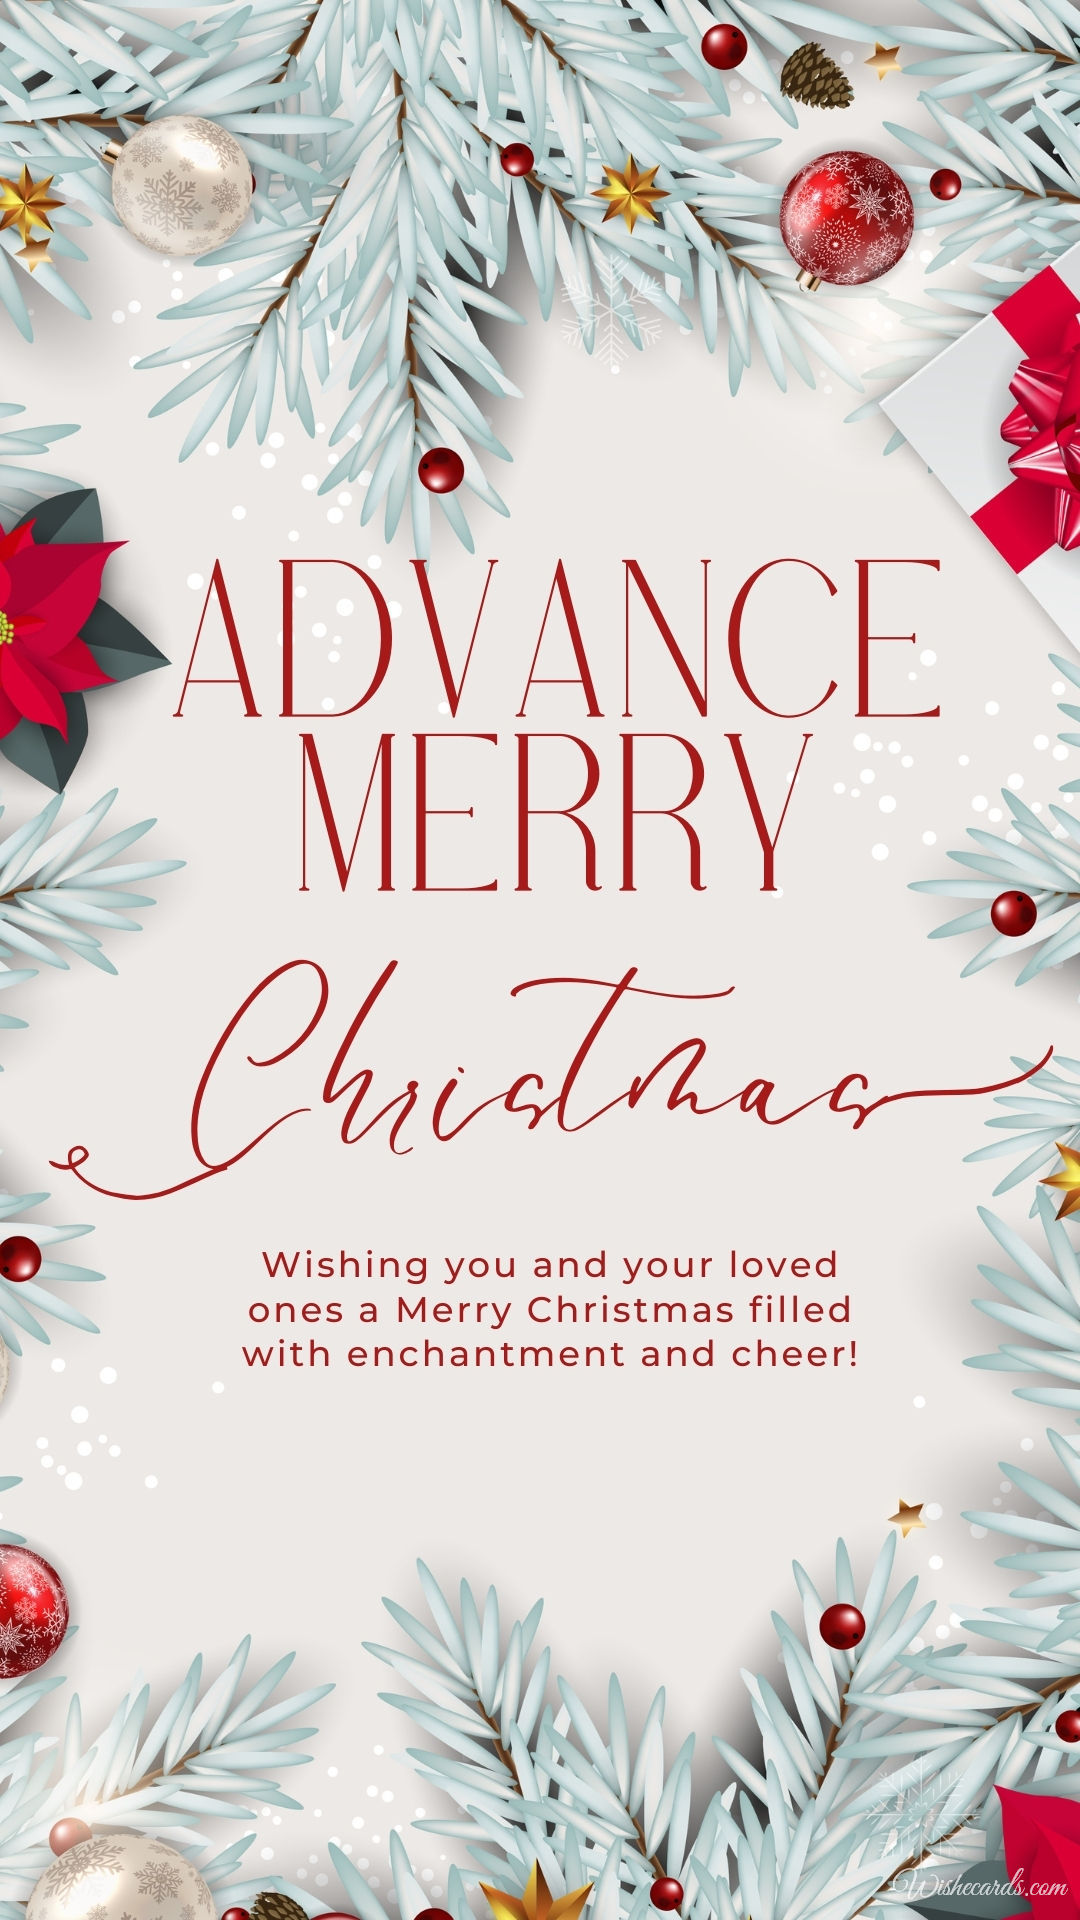 Advance Merry Christmas Wish Image